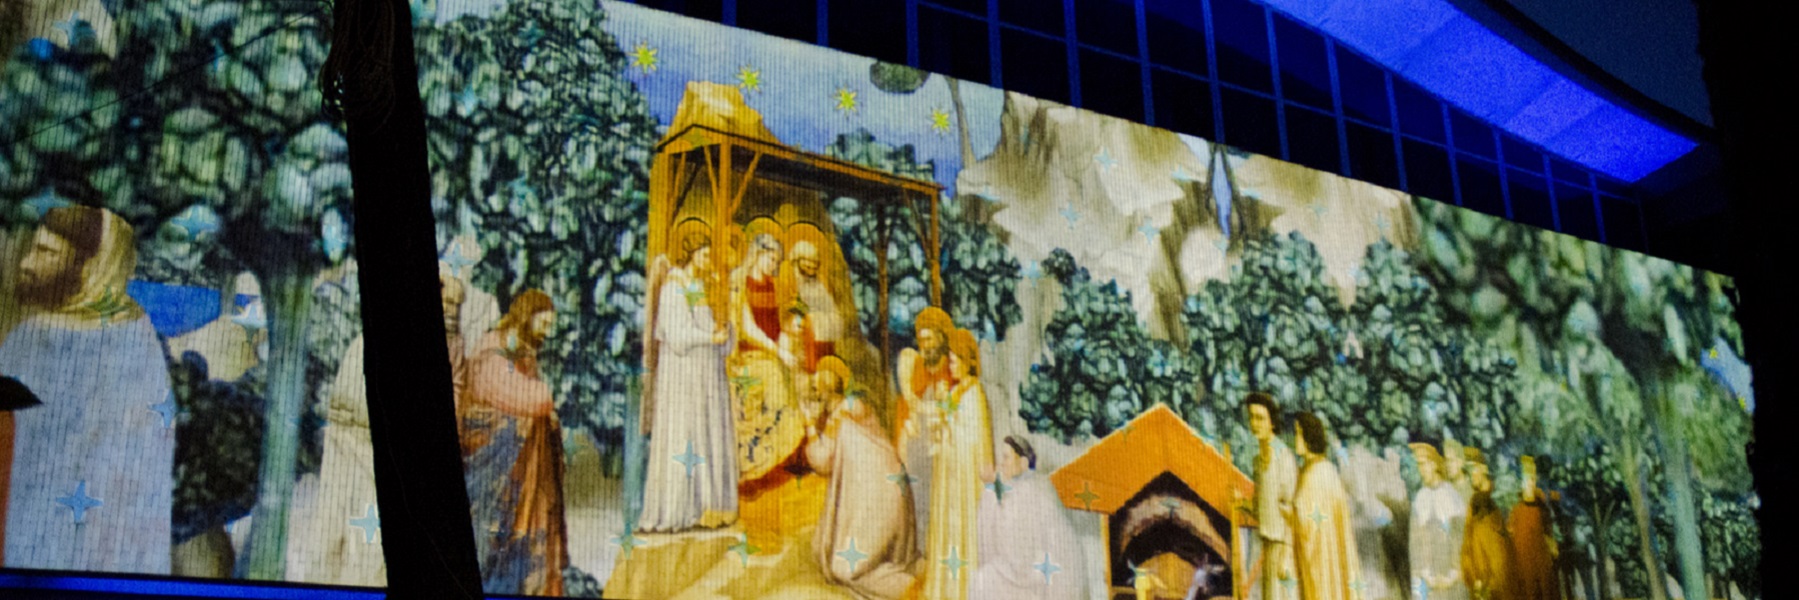 The Nativity Scenes of Cervia